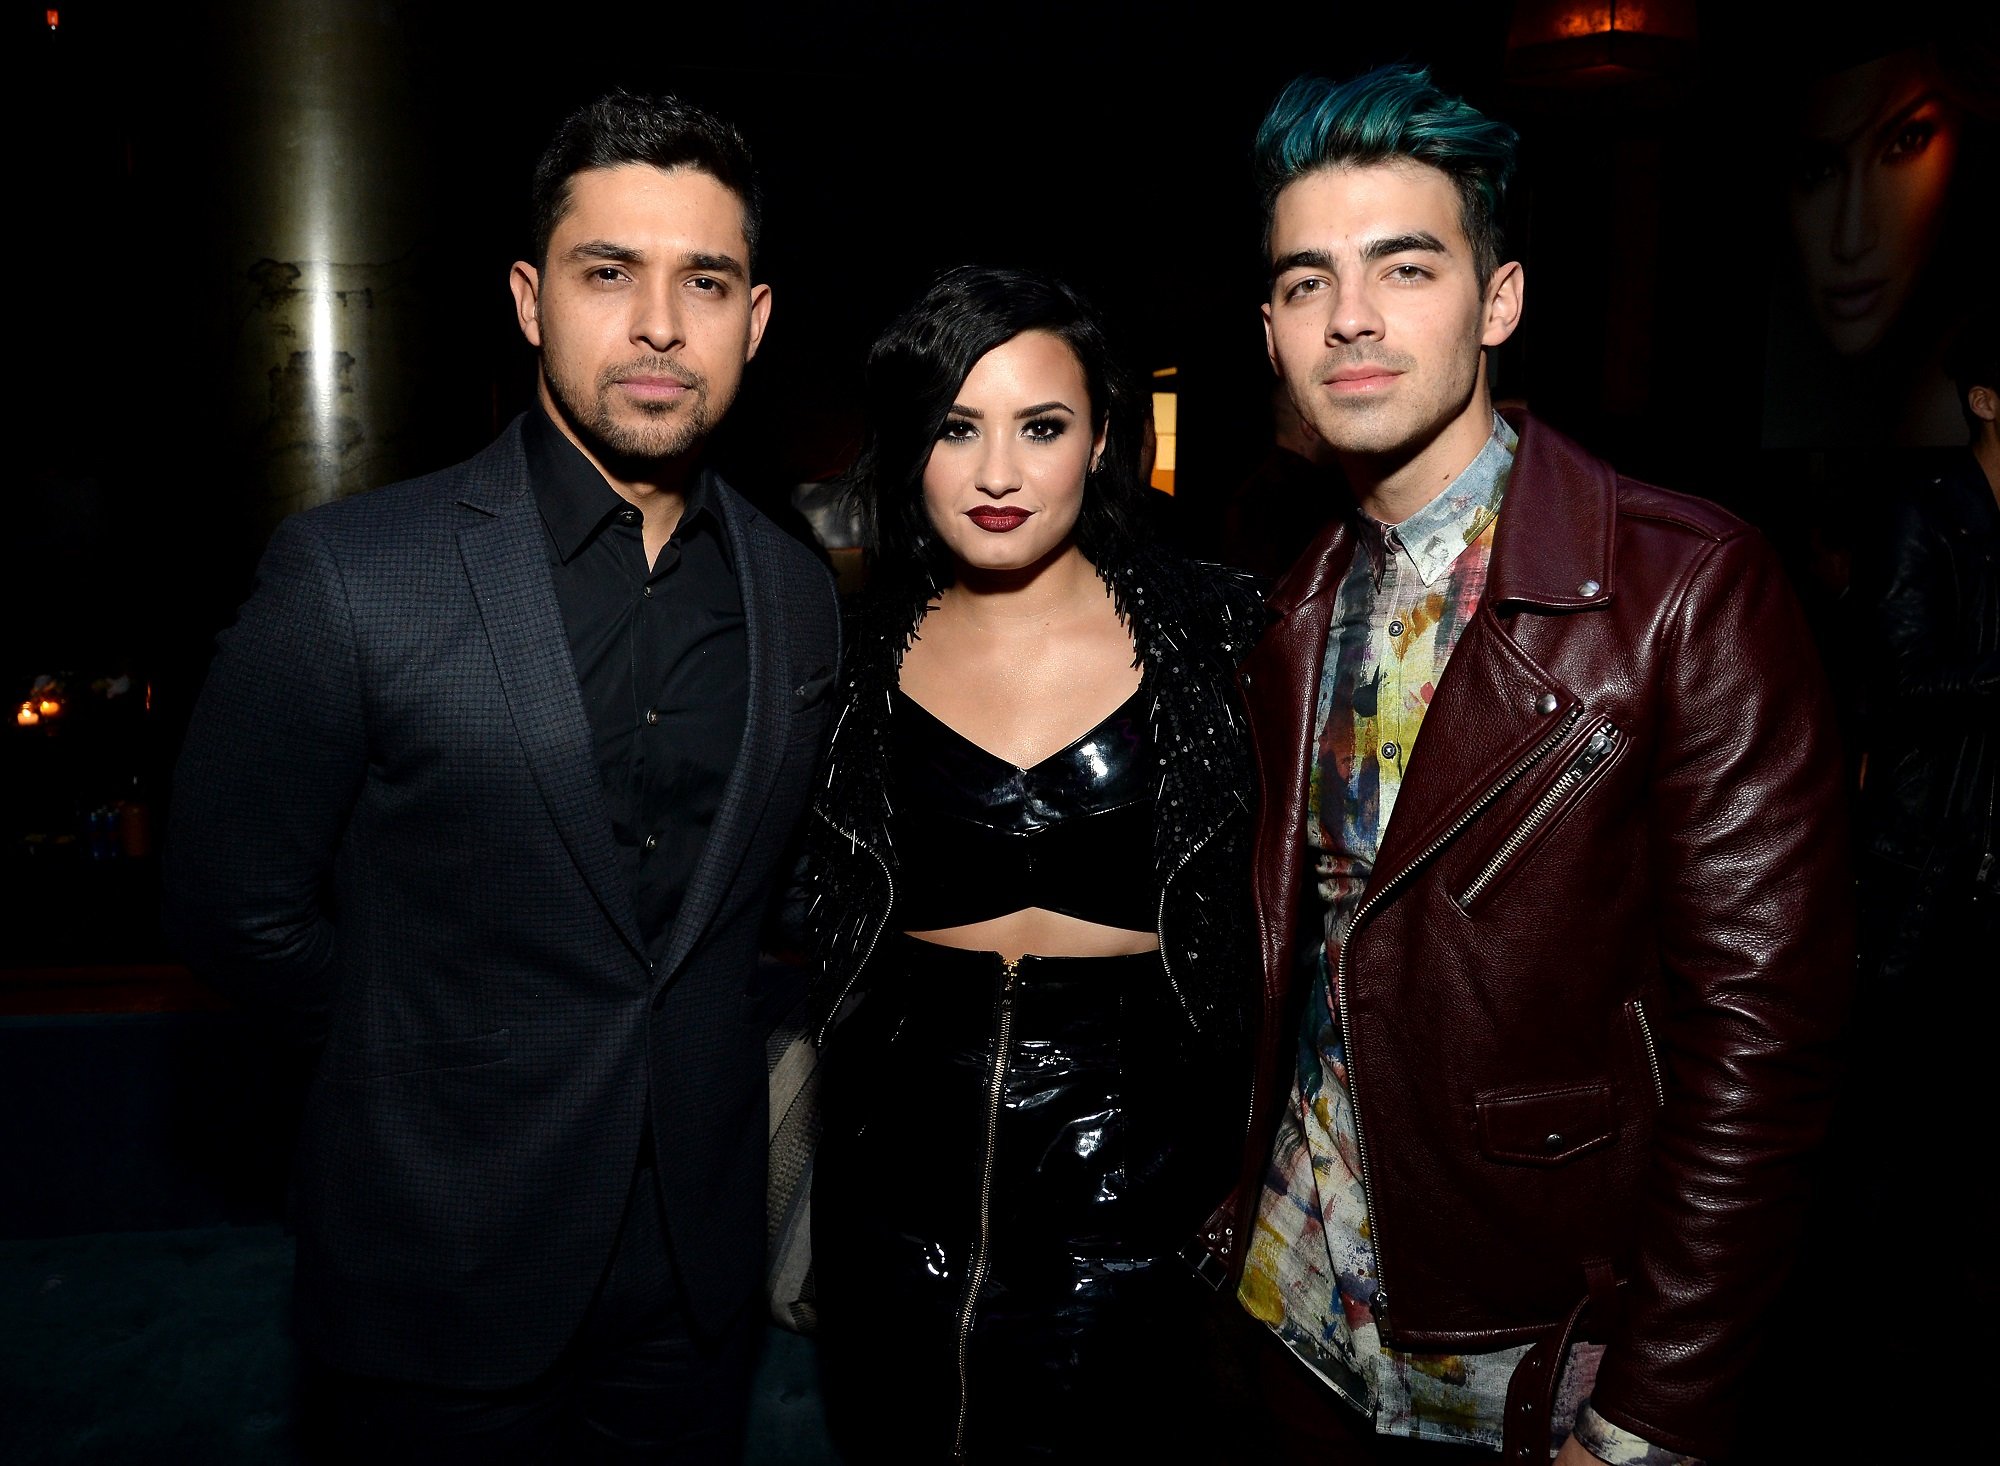 Wilmer Valderrama, Demi Lovato and Joe Jonas on November 22, 2015 in West Hollywood, California. 